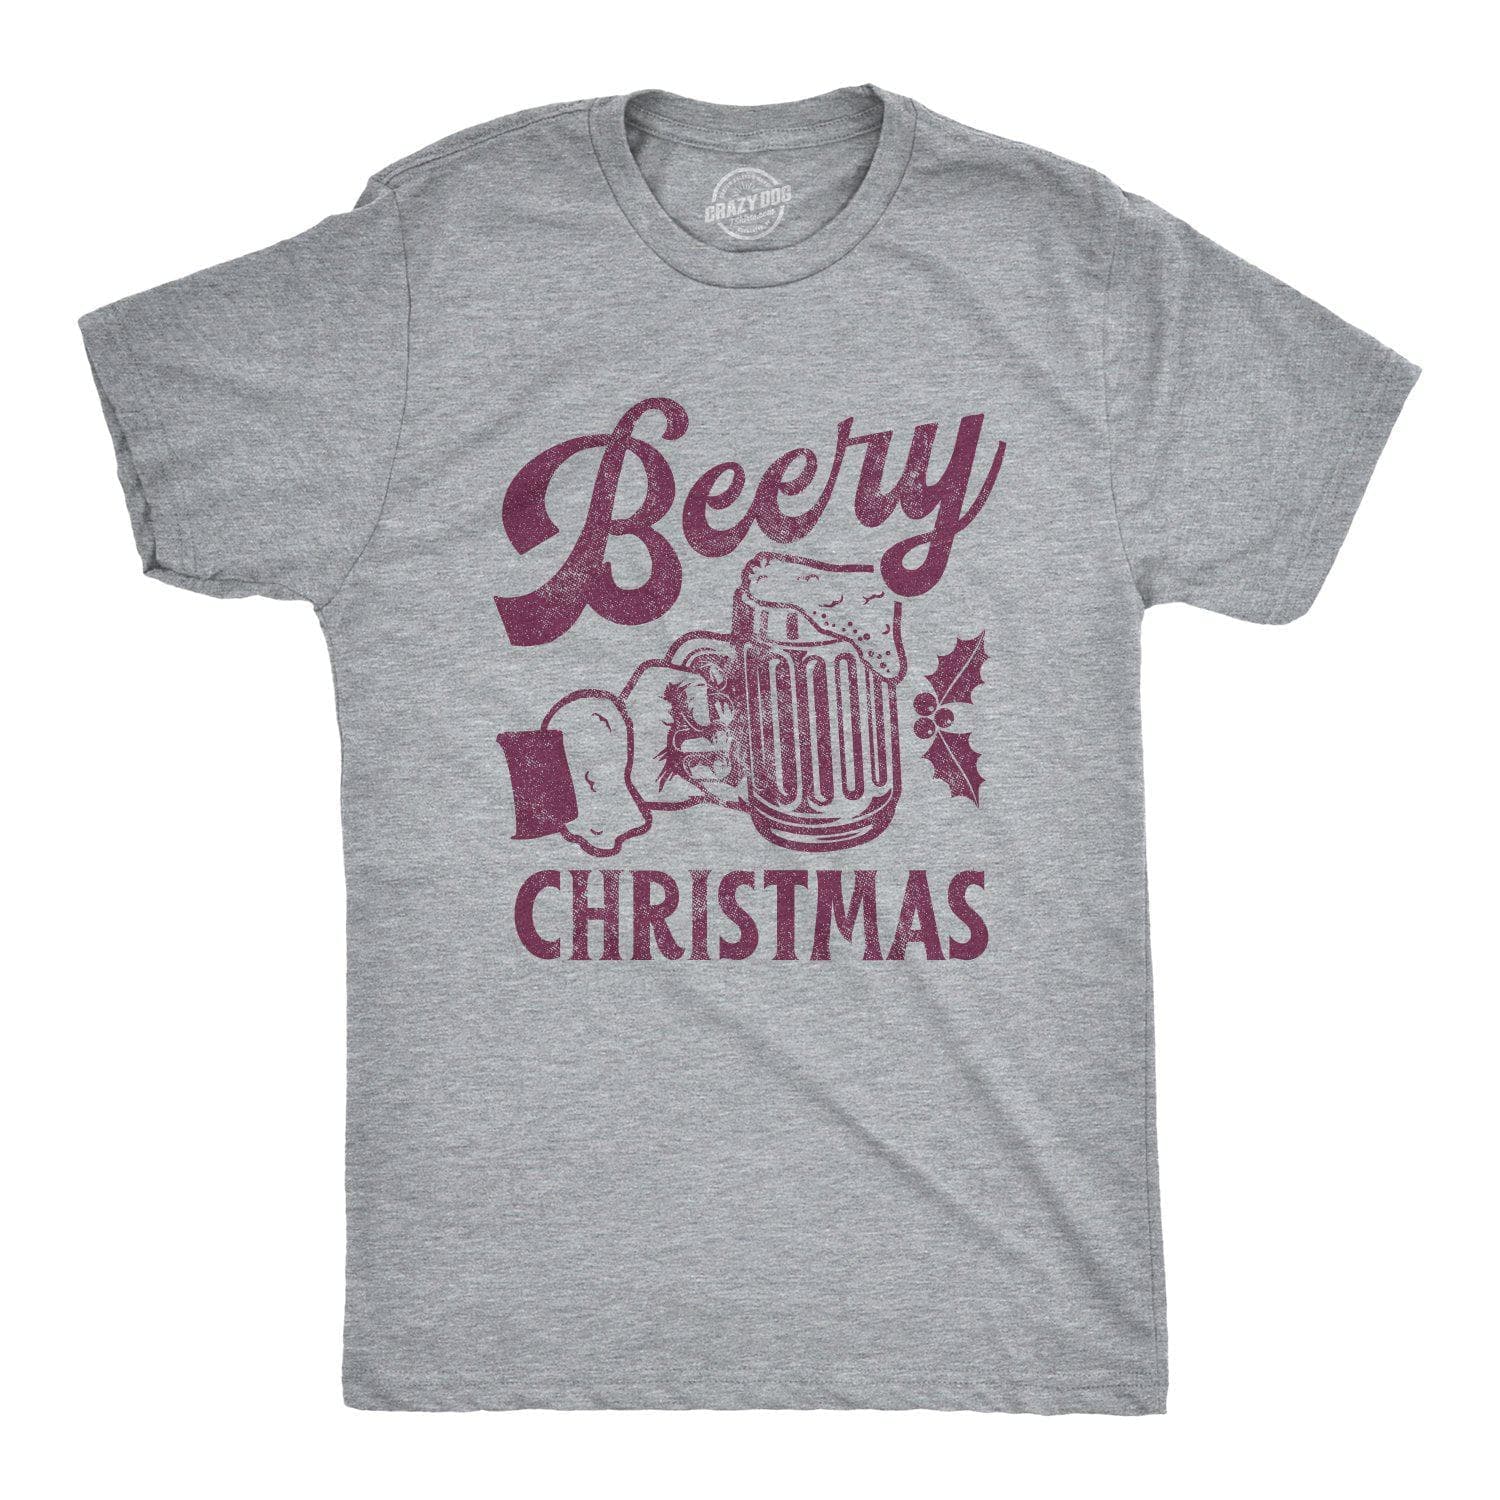 Beery Christmas Men's Tshirt - Crazy Dog T-Shirts